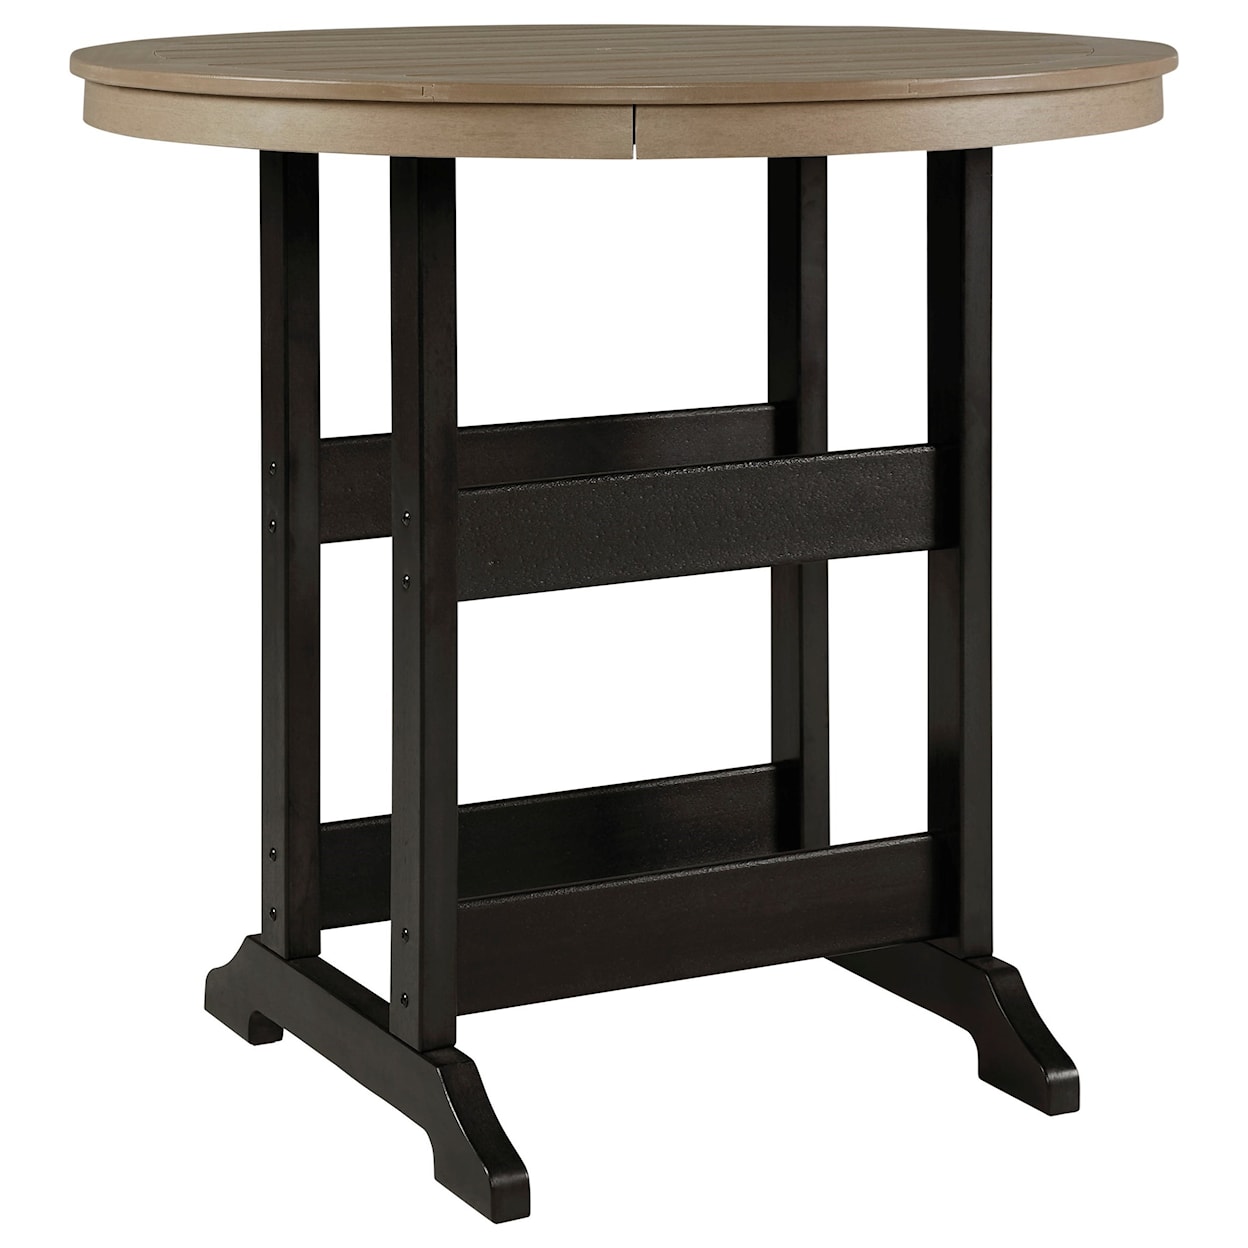 Ashley Furniture Signature Design Fairen Trail 5-Piece Round Bar Table Set